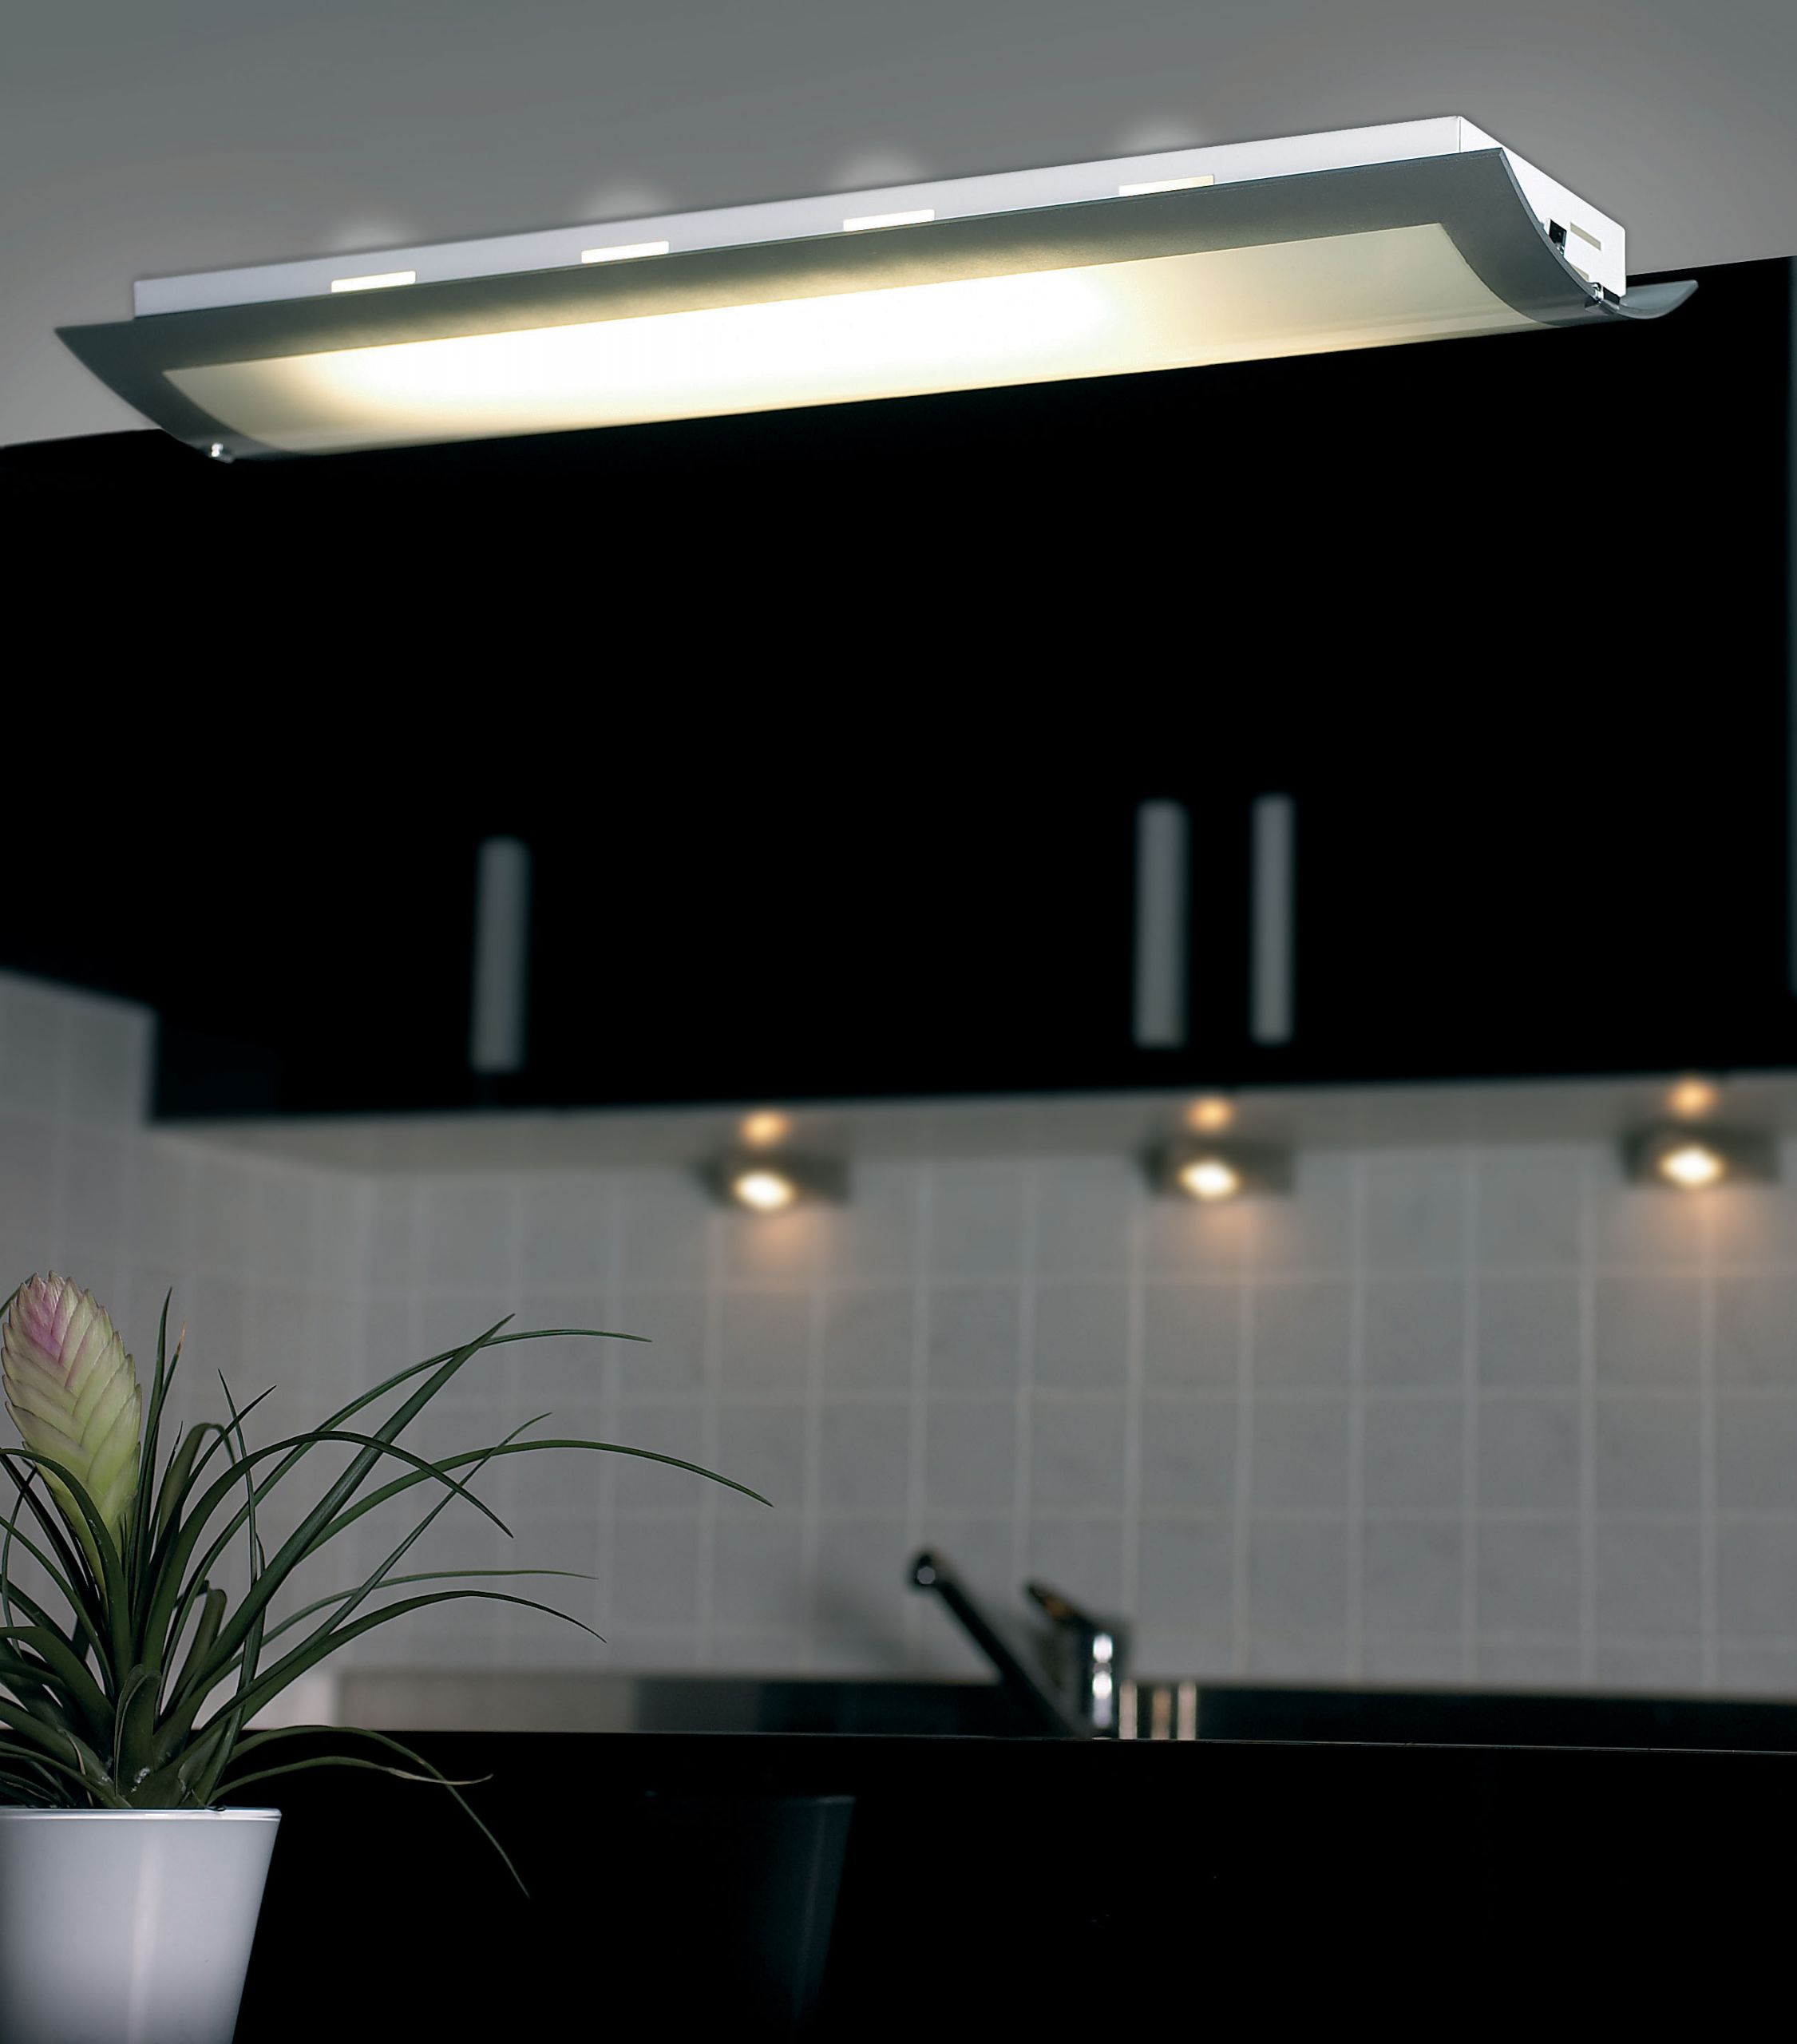 Led Kitchen Ceiling Light Fixtures
 Get large amount of illumination with Led kitchen ceiling